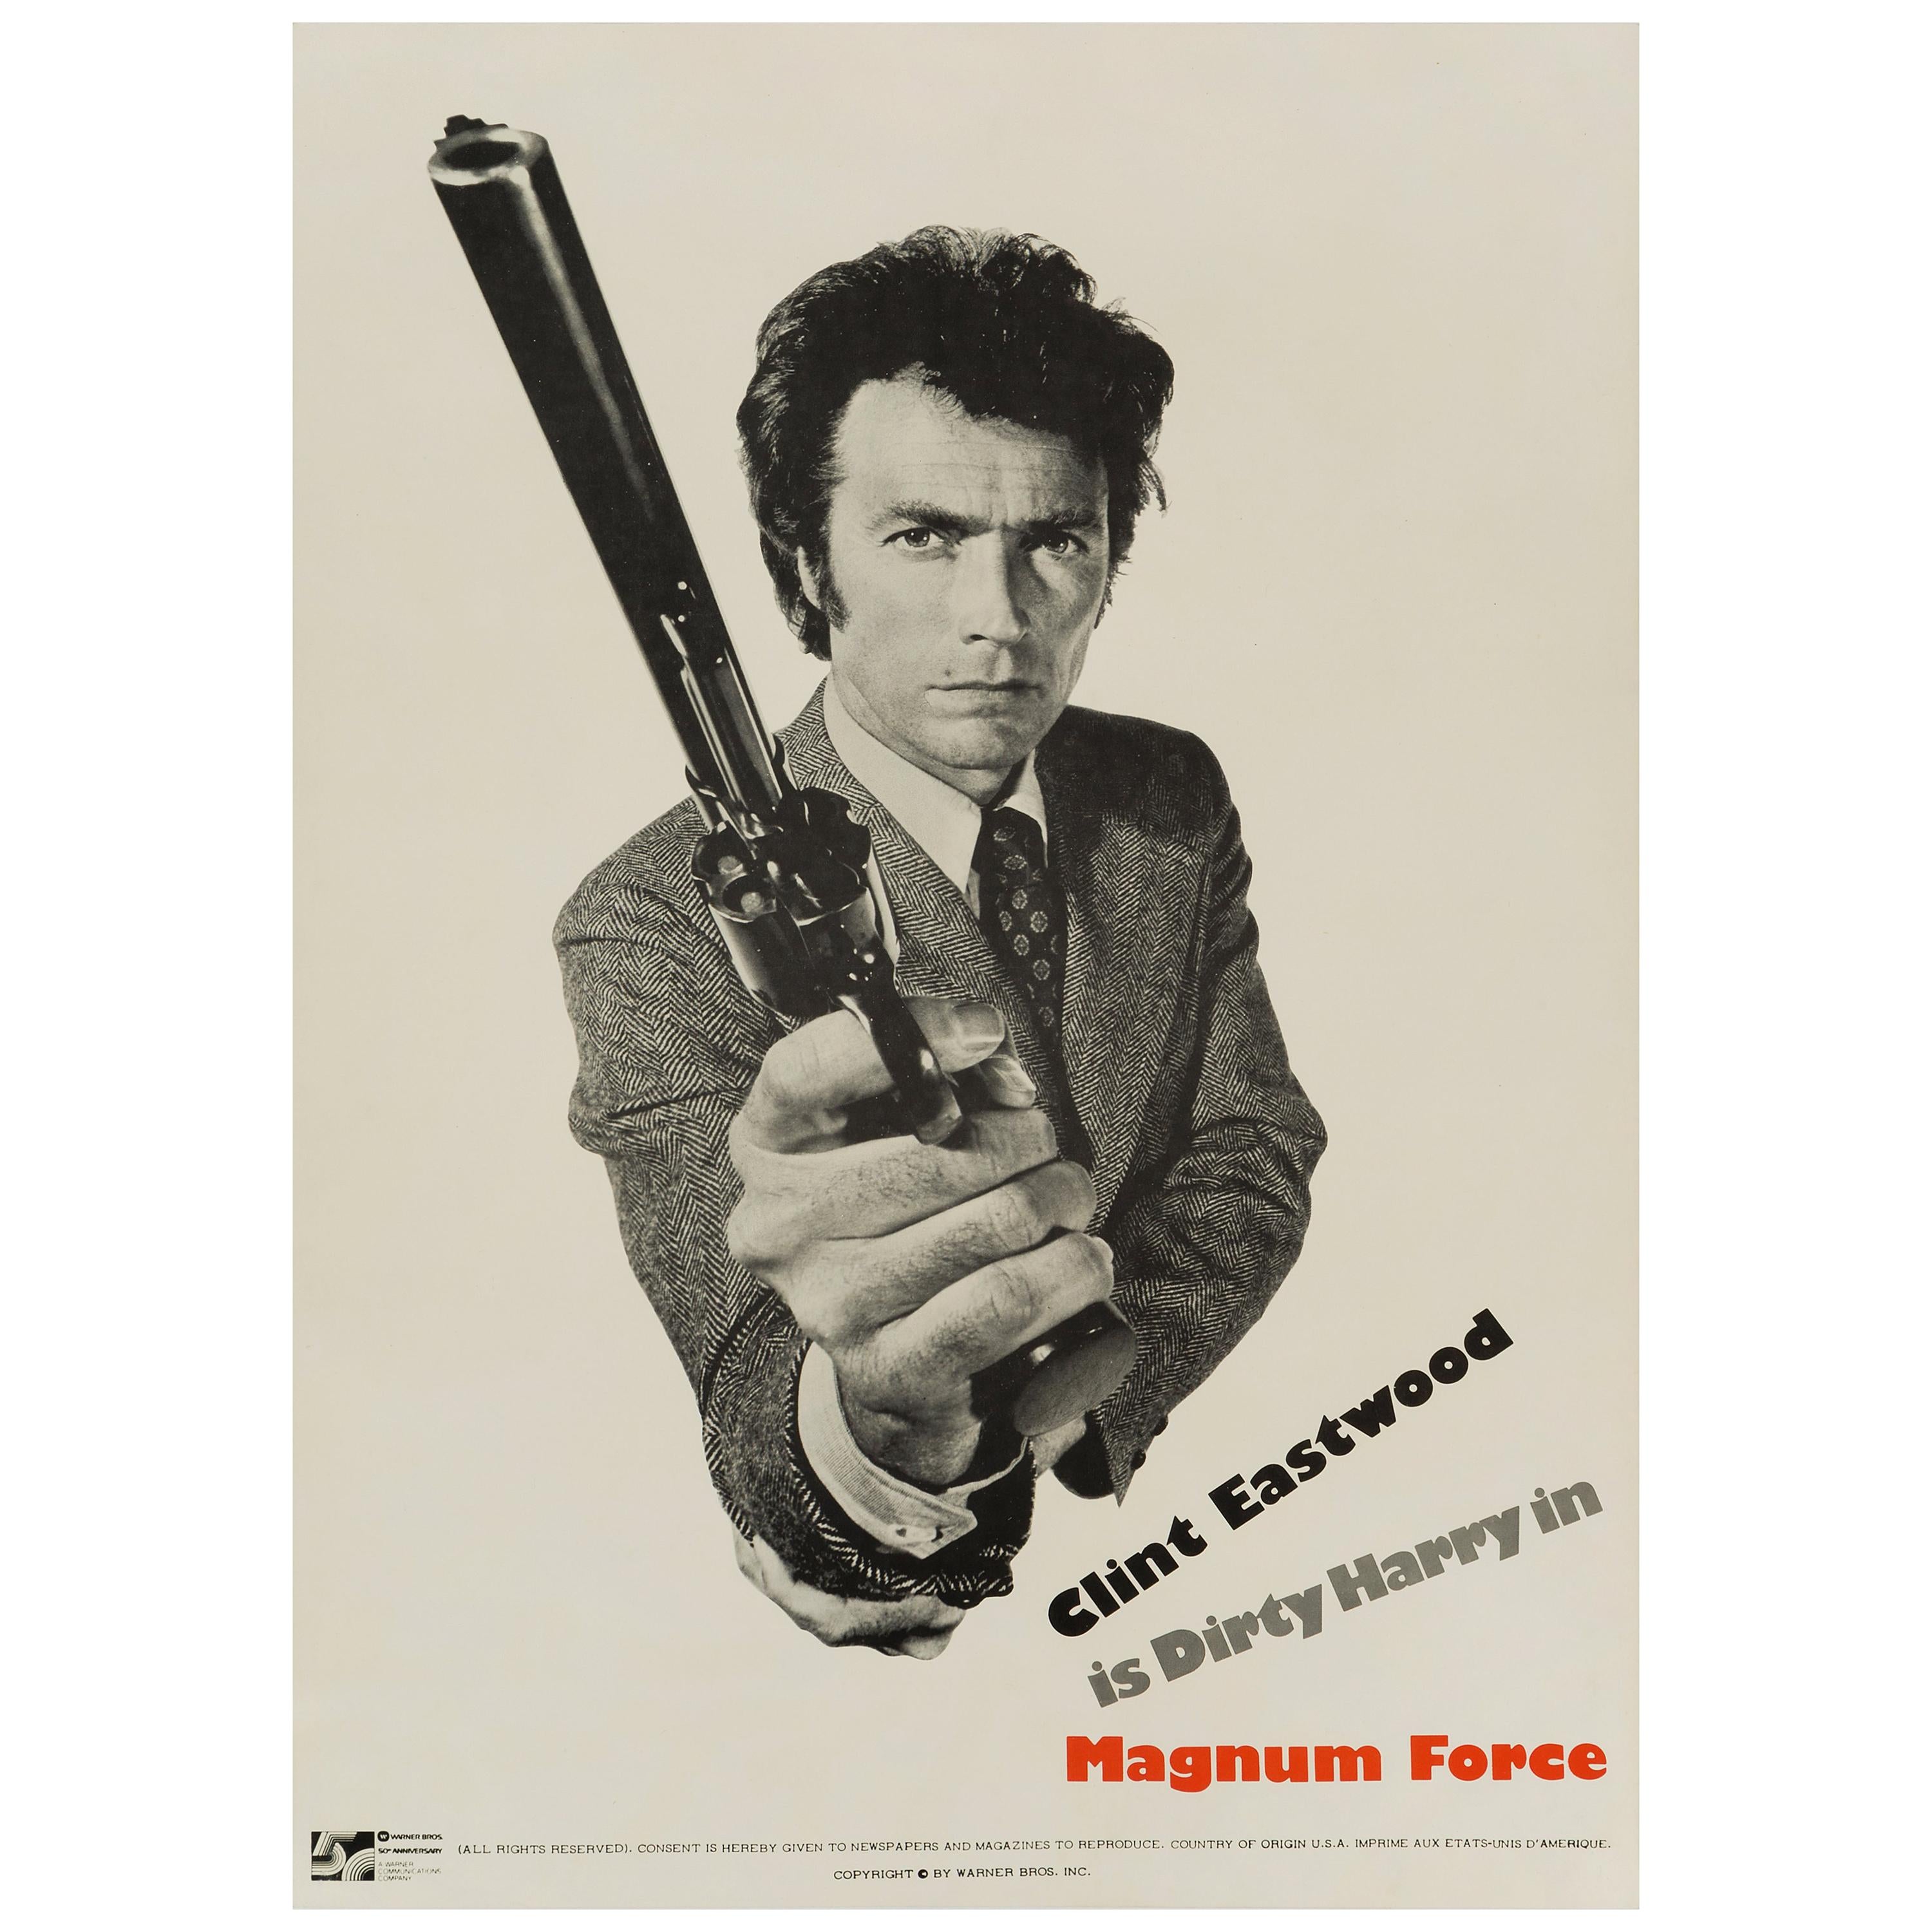 Dirty Harry 'Magnum Force' Original Vintage Movie Poster, American, 1973